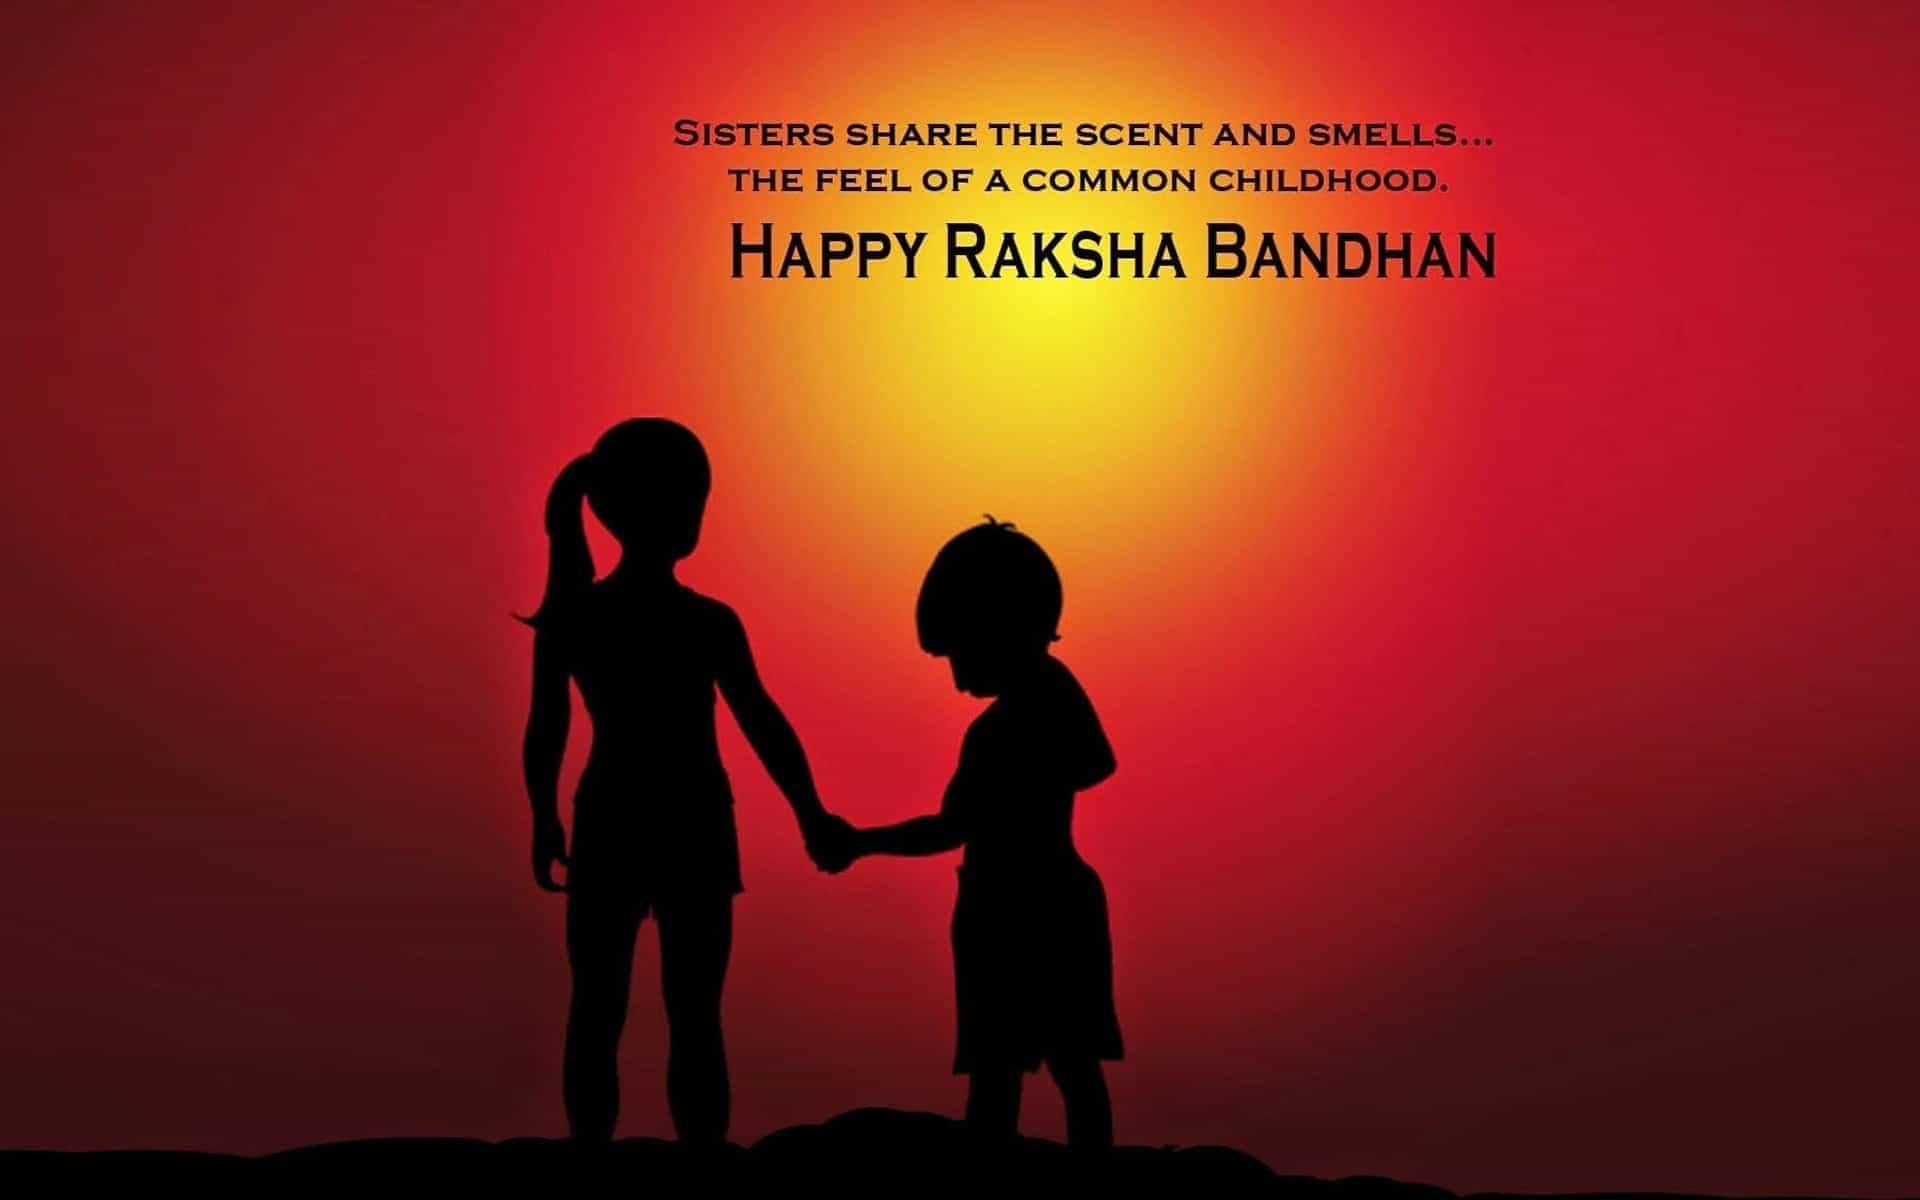 Happy Raksha Bandhan Animated Cartoon Pictures {Images} 2017 - Todayz News